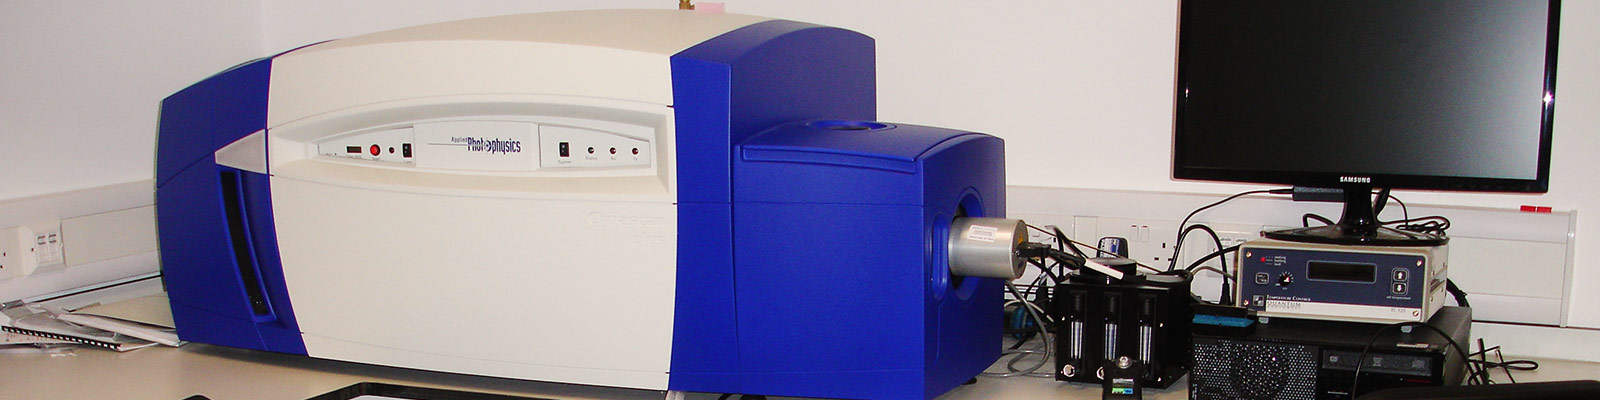 An optical spectrometer